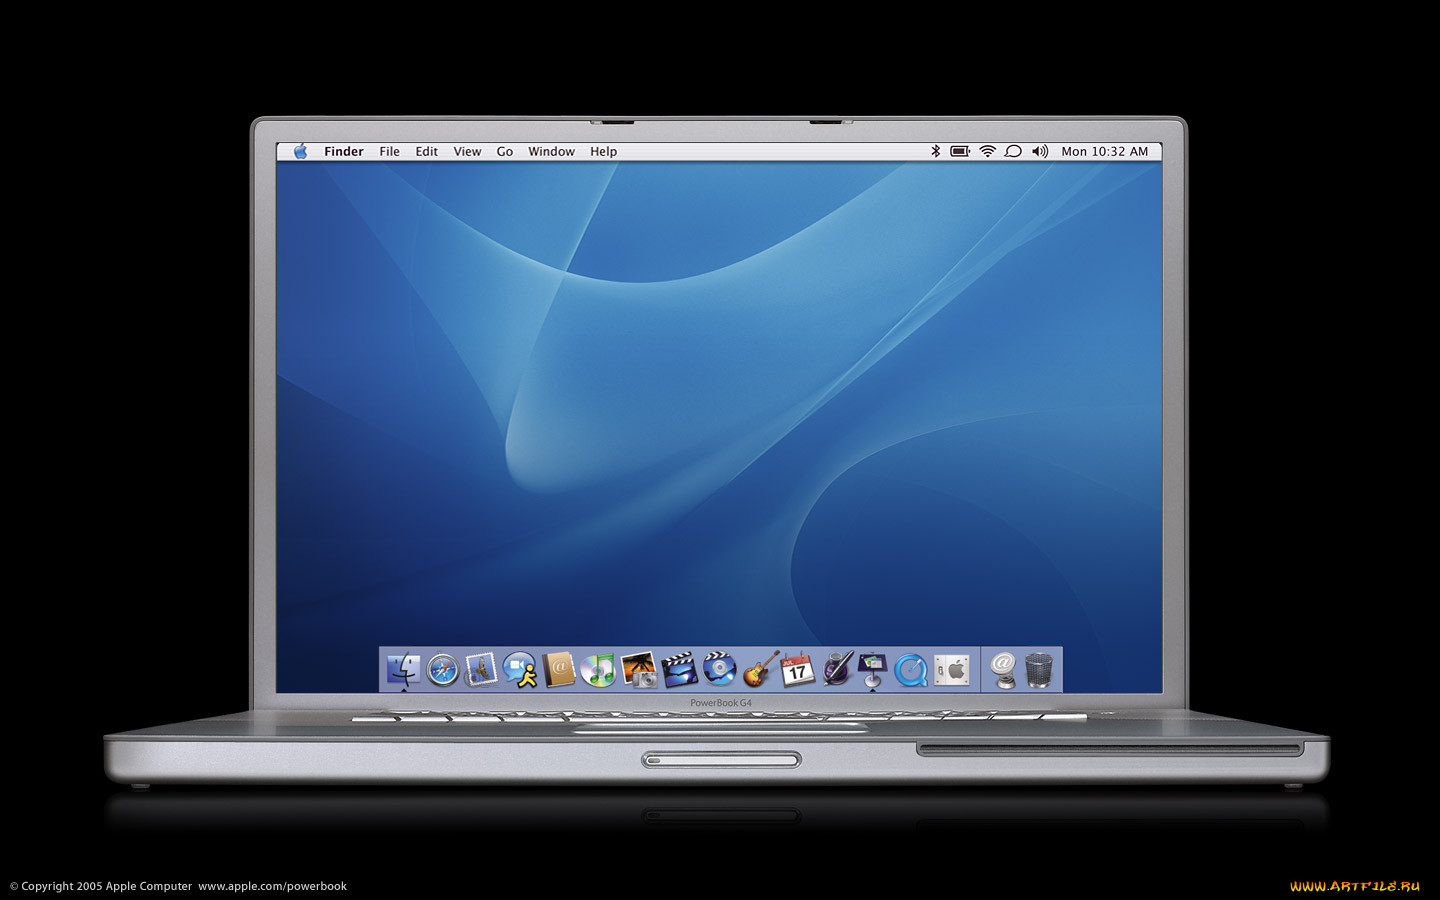 Картинка на монитор ноутбука. Apple POWERBOOK g4. POWERBOOK g5. Монитор ноутбука. Изображение монитора ноутбука.